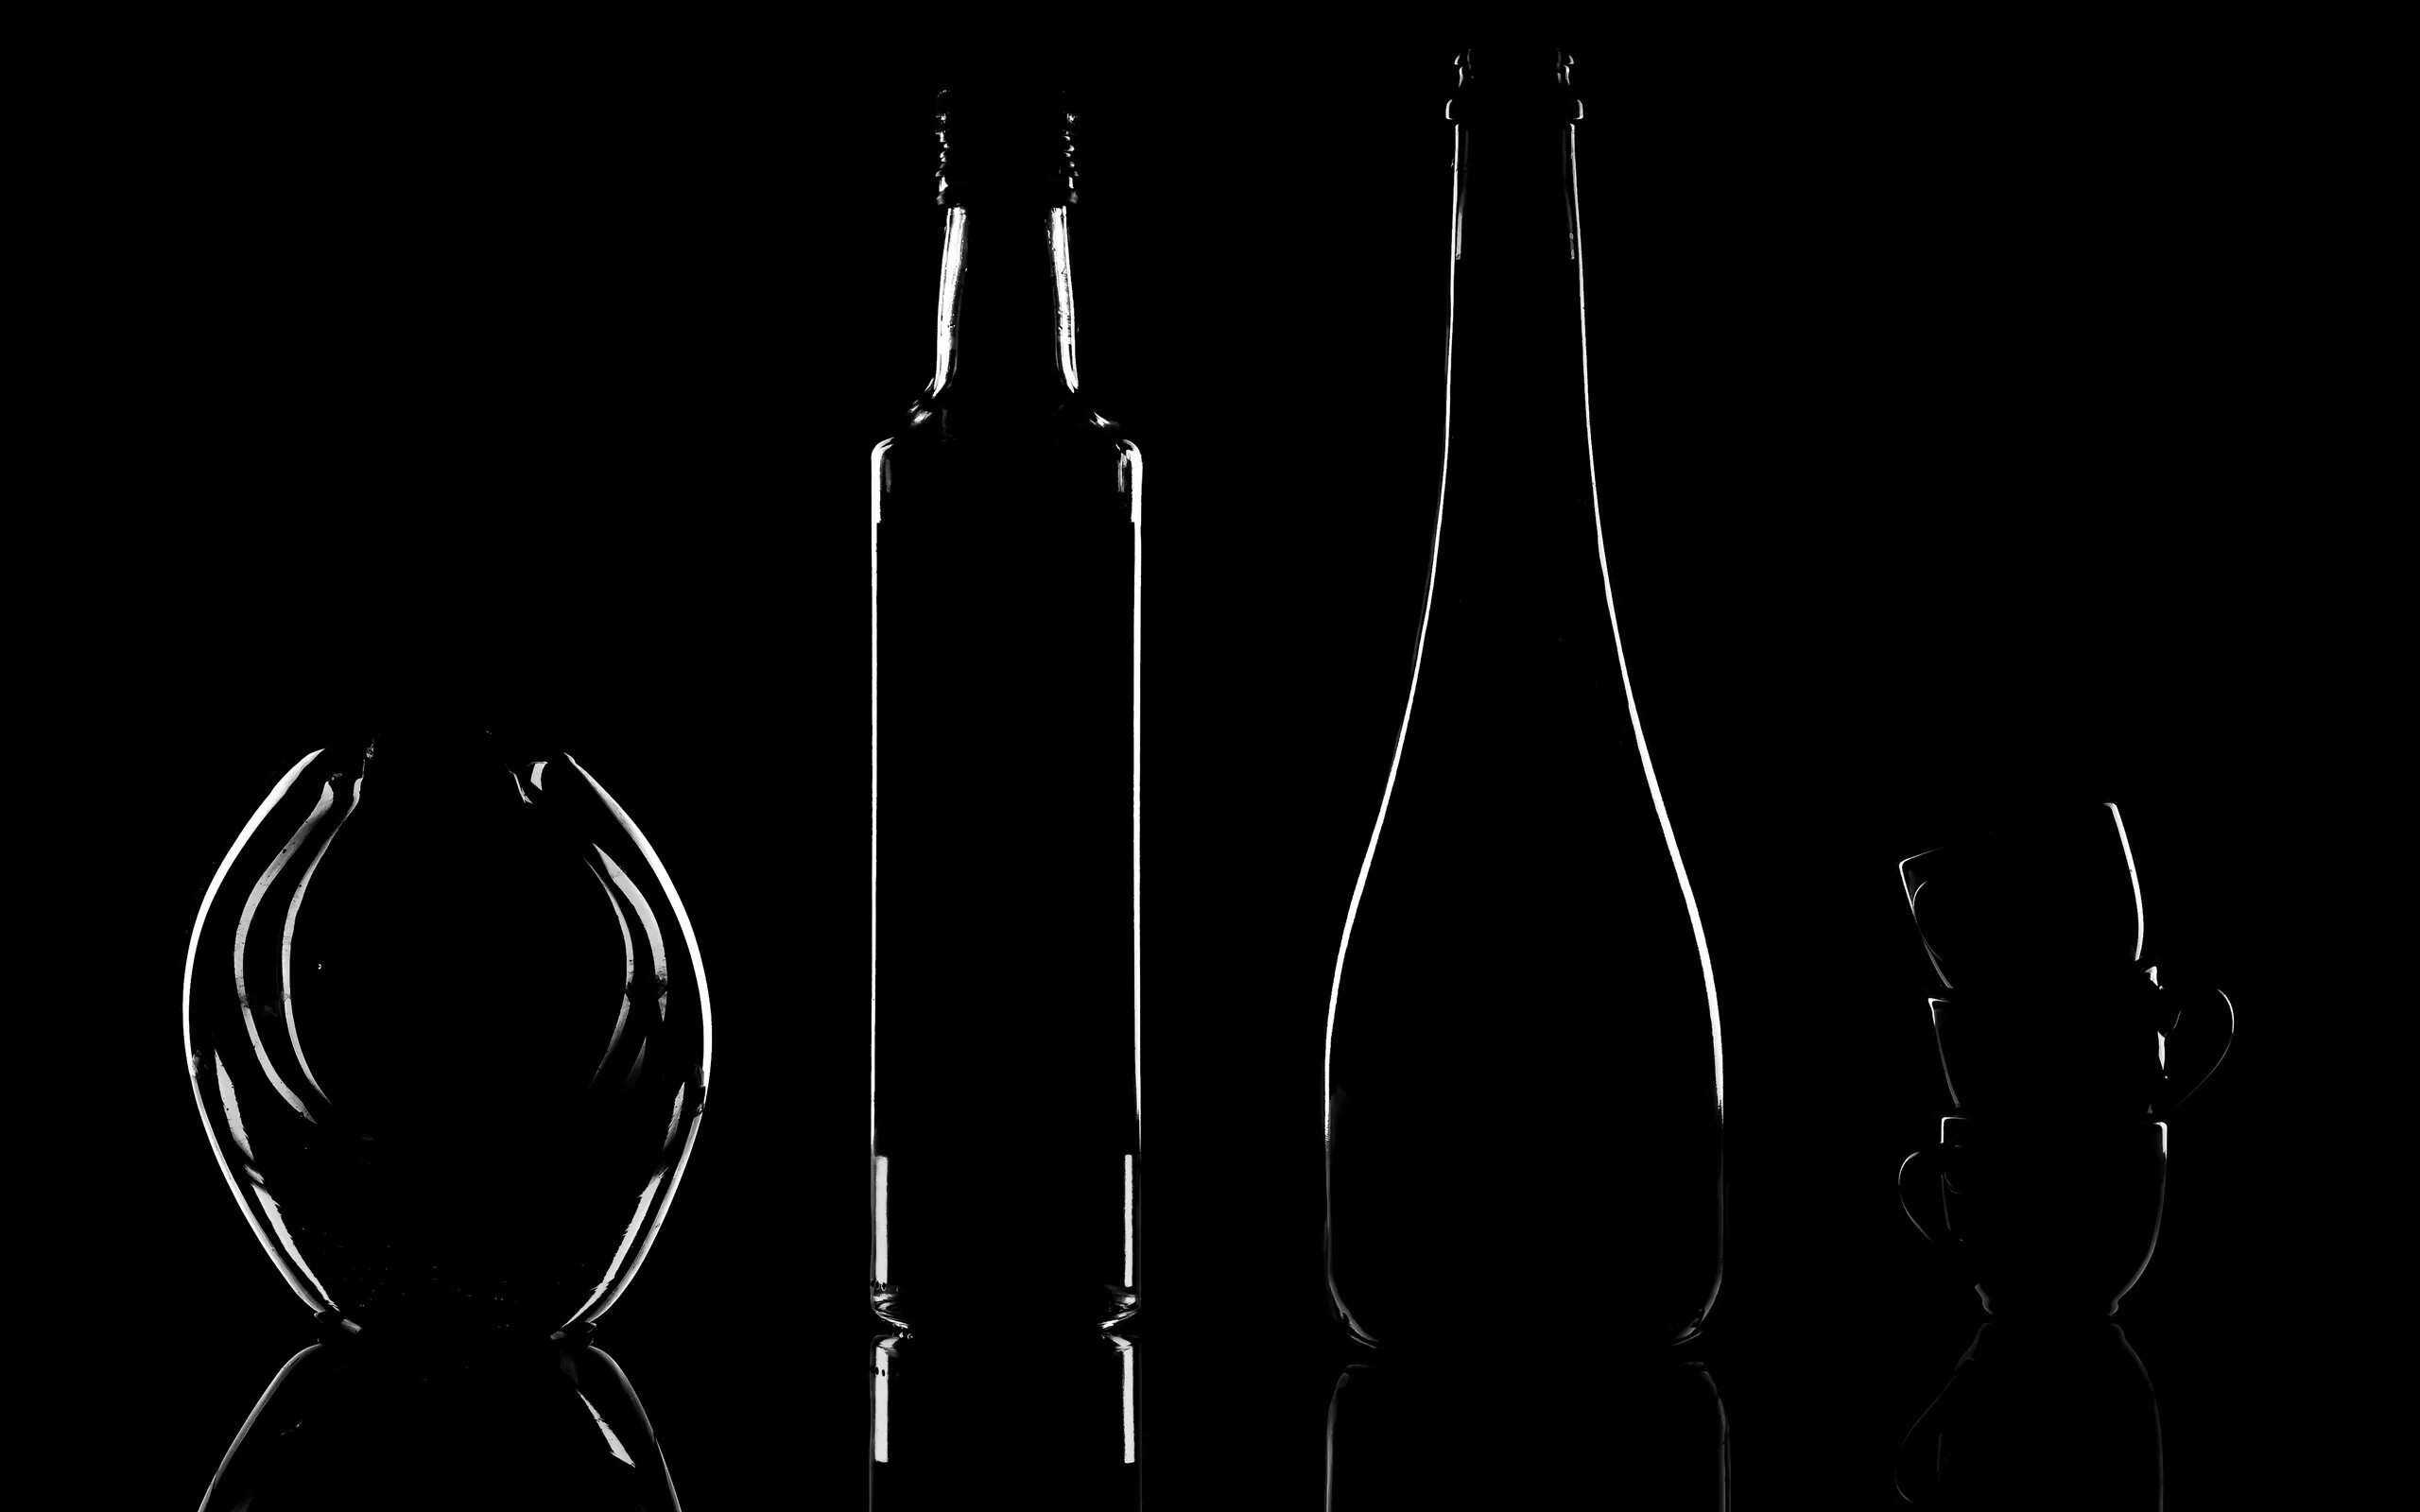 Бутылка фон. Бутылка на черном фоне. Стеклянная бутылка на черном фоне. Силуэт стеклянной бутылки. Стеклянная бутылка на темном фоне.